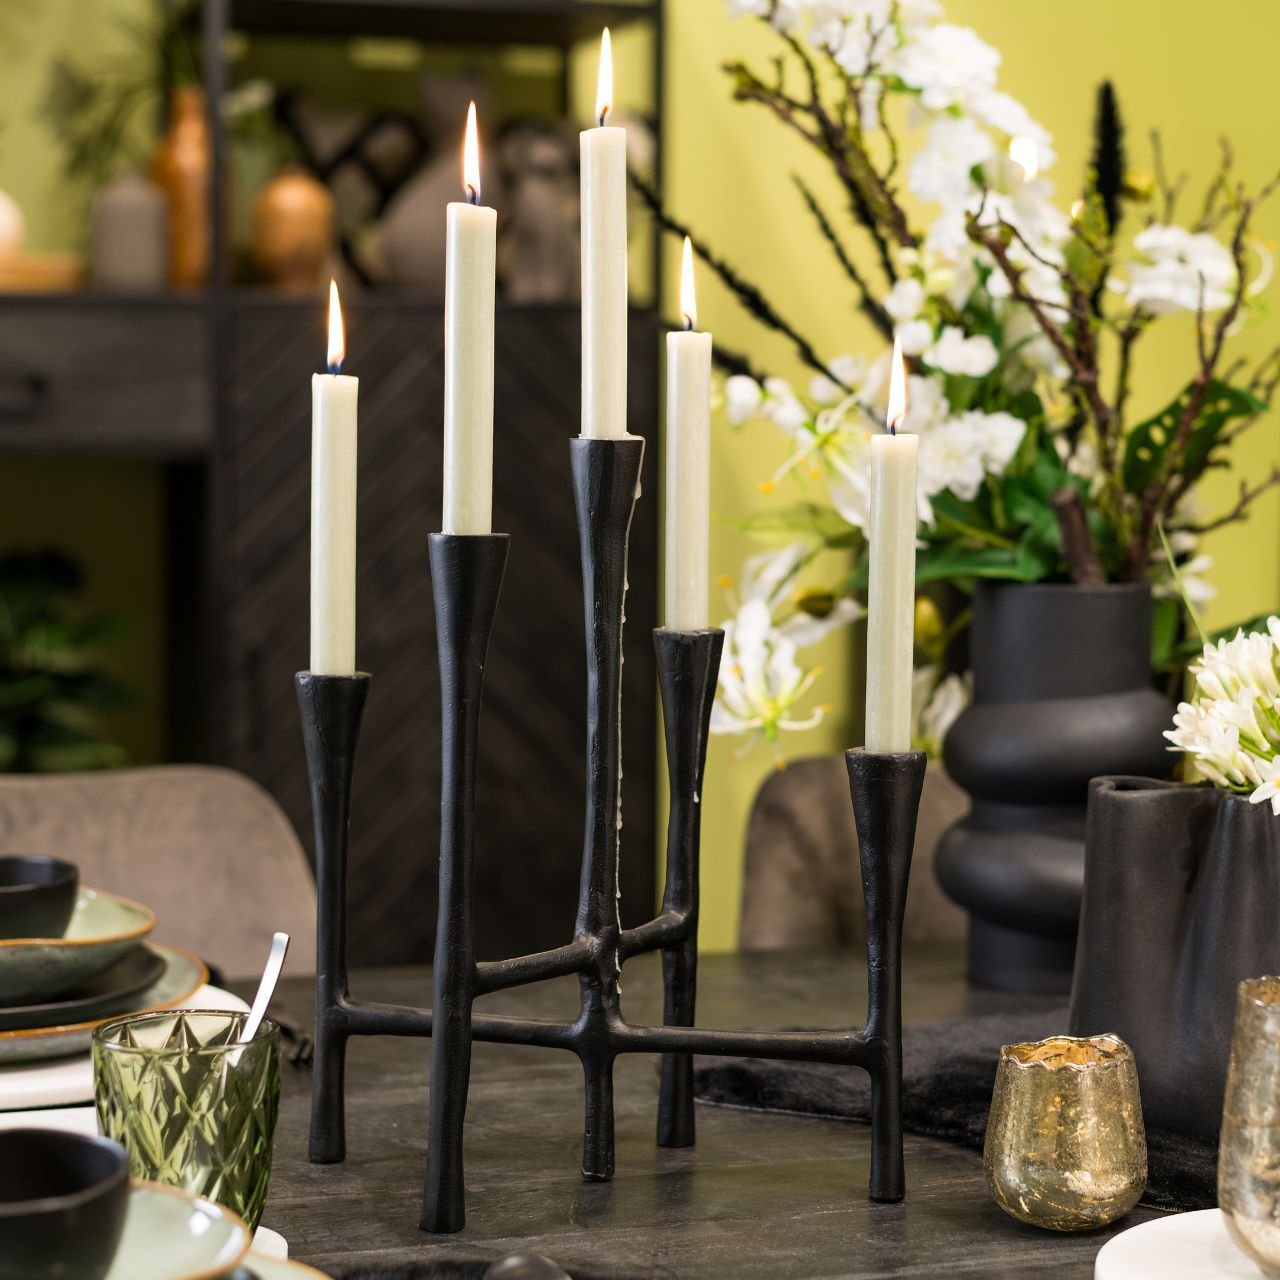 Kerzenhalter für 5er Kerzen aus Metall schwarz (B/H/T) 31x36x17cm